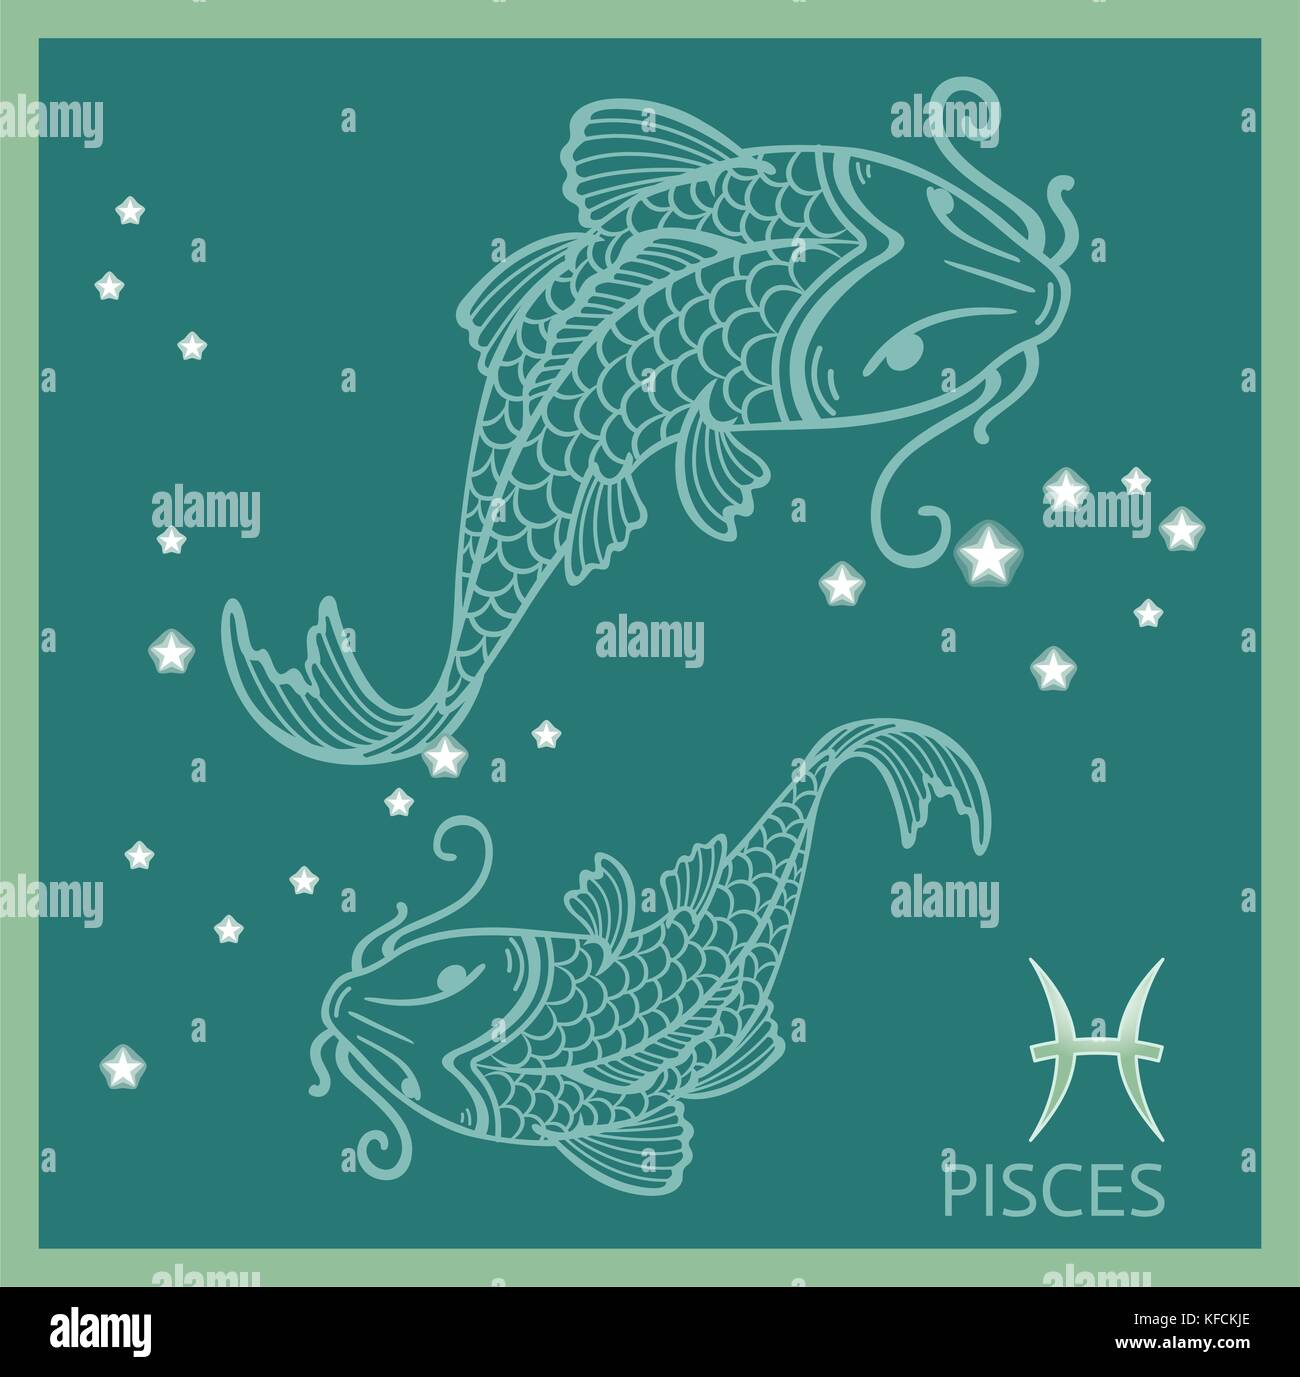 Pisces zodiac sign, constellation. Stock Vector